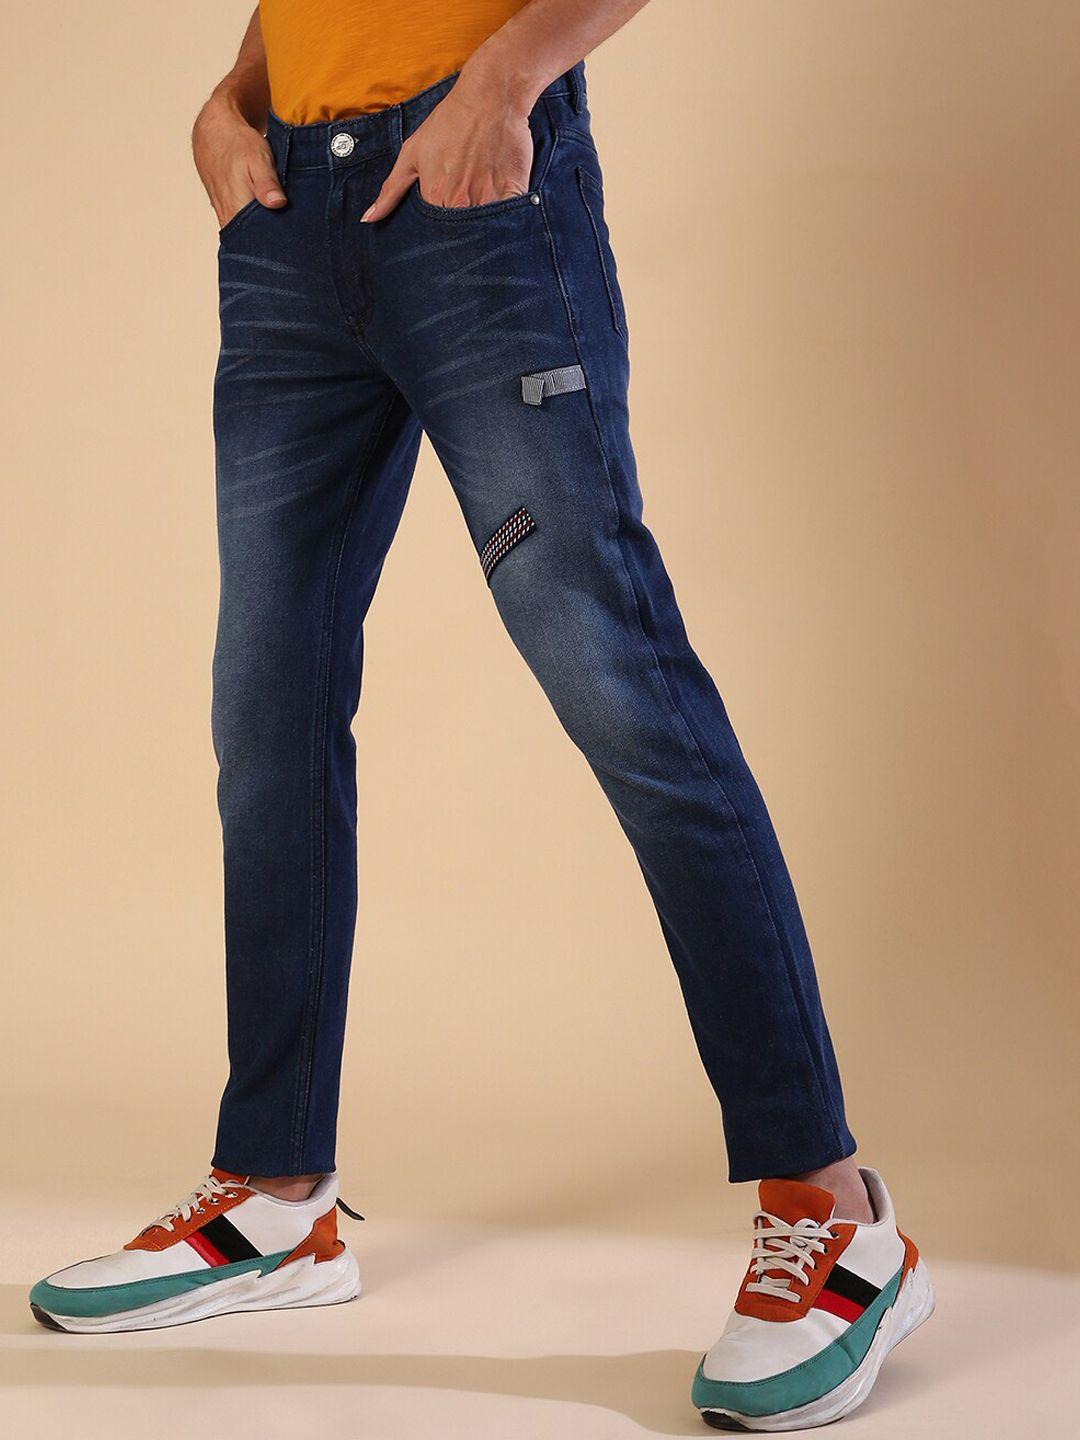 campus-sutra-men-blue-super-stretchable-jeans